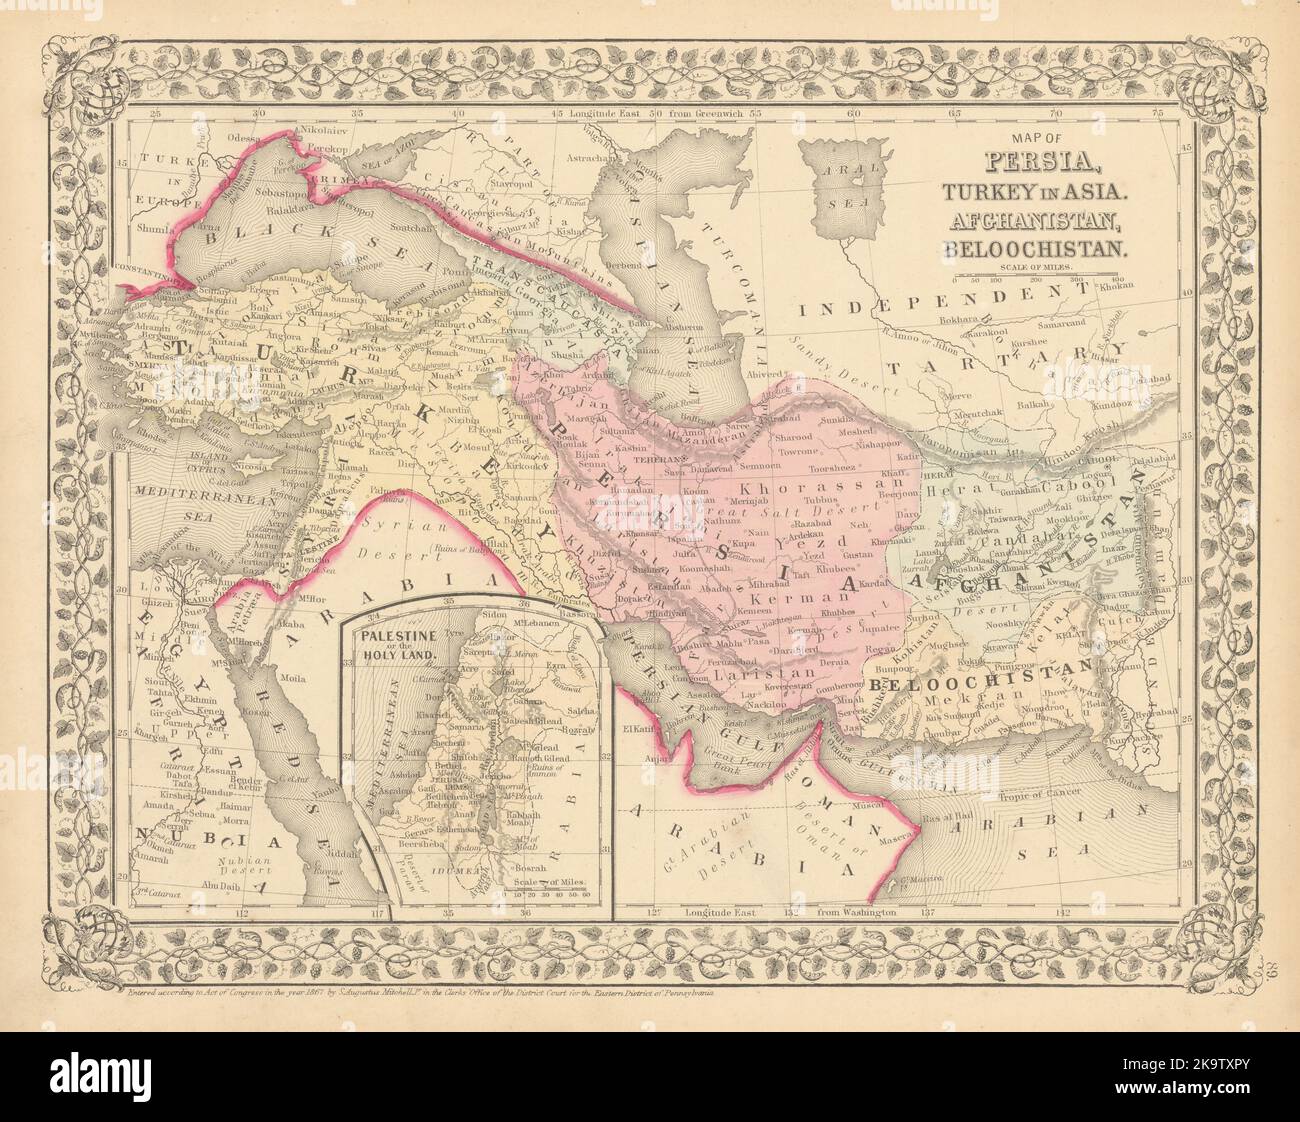 Mappa di Persia, Turchia in Asia, Afghanistan, Beloochistan. MITCHELL 1869 Foto Stock